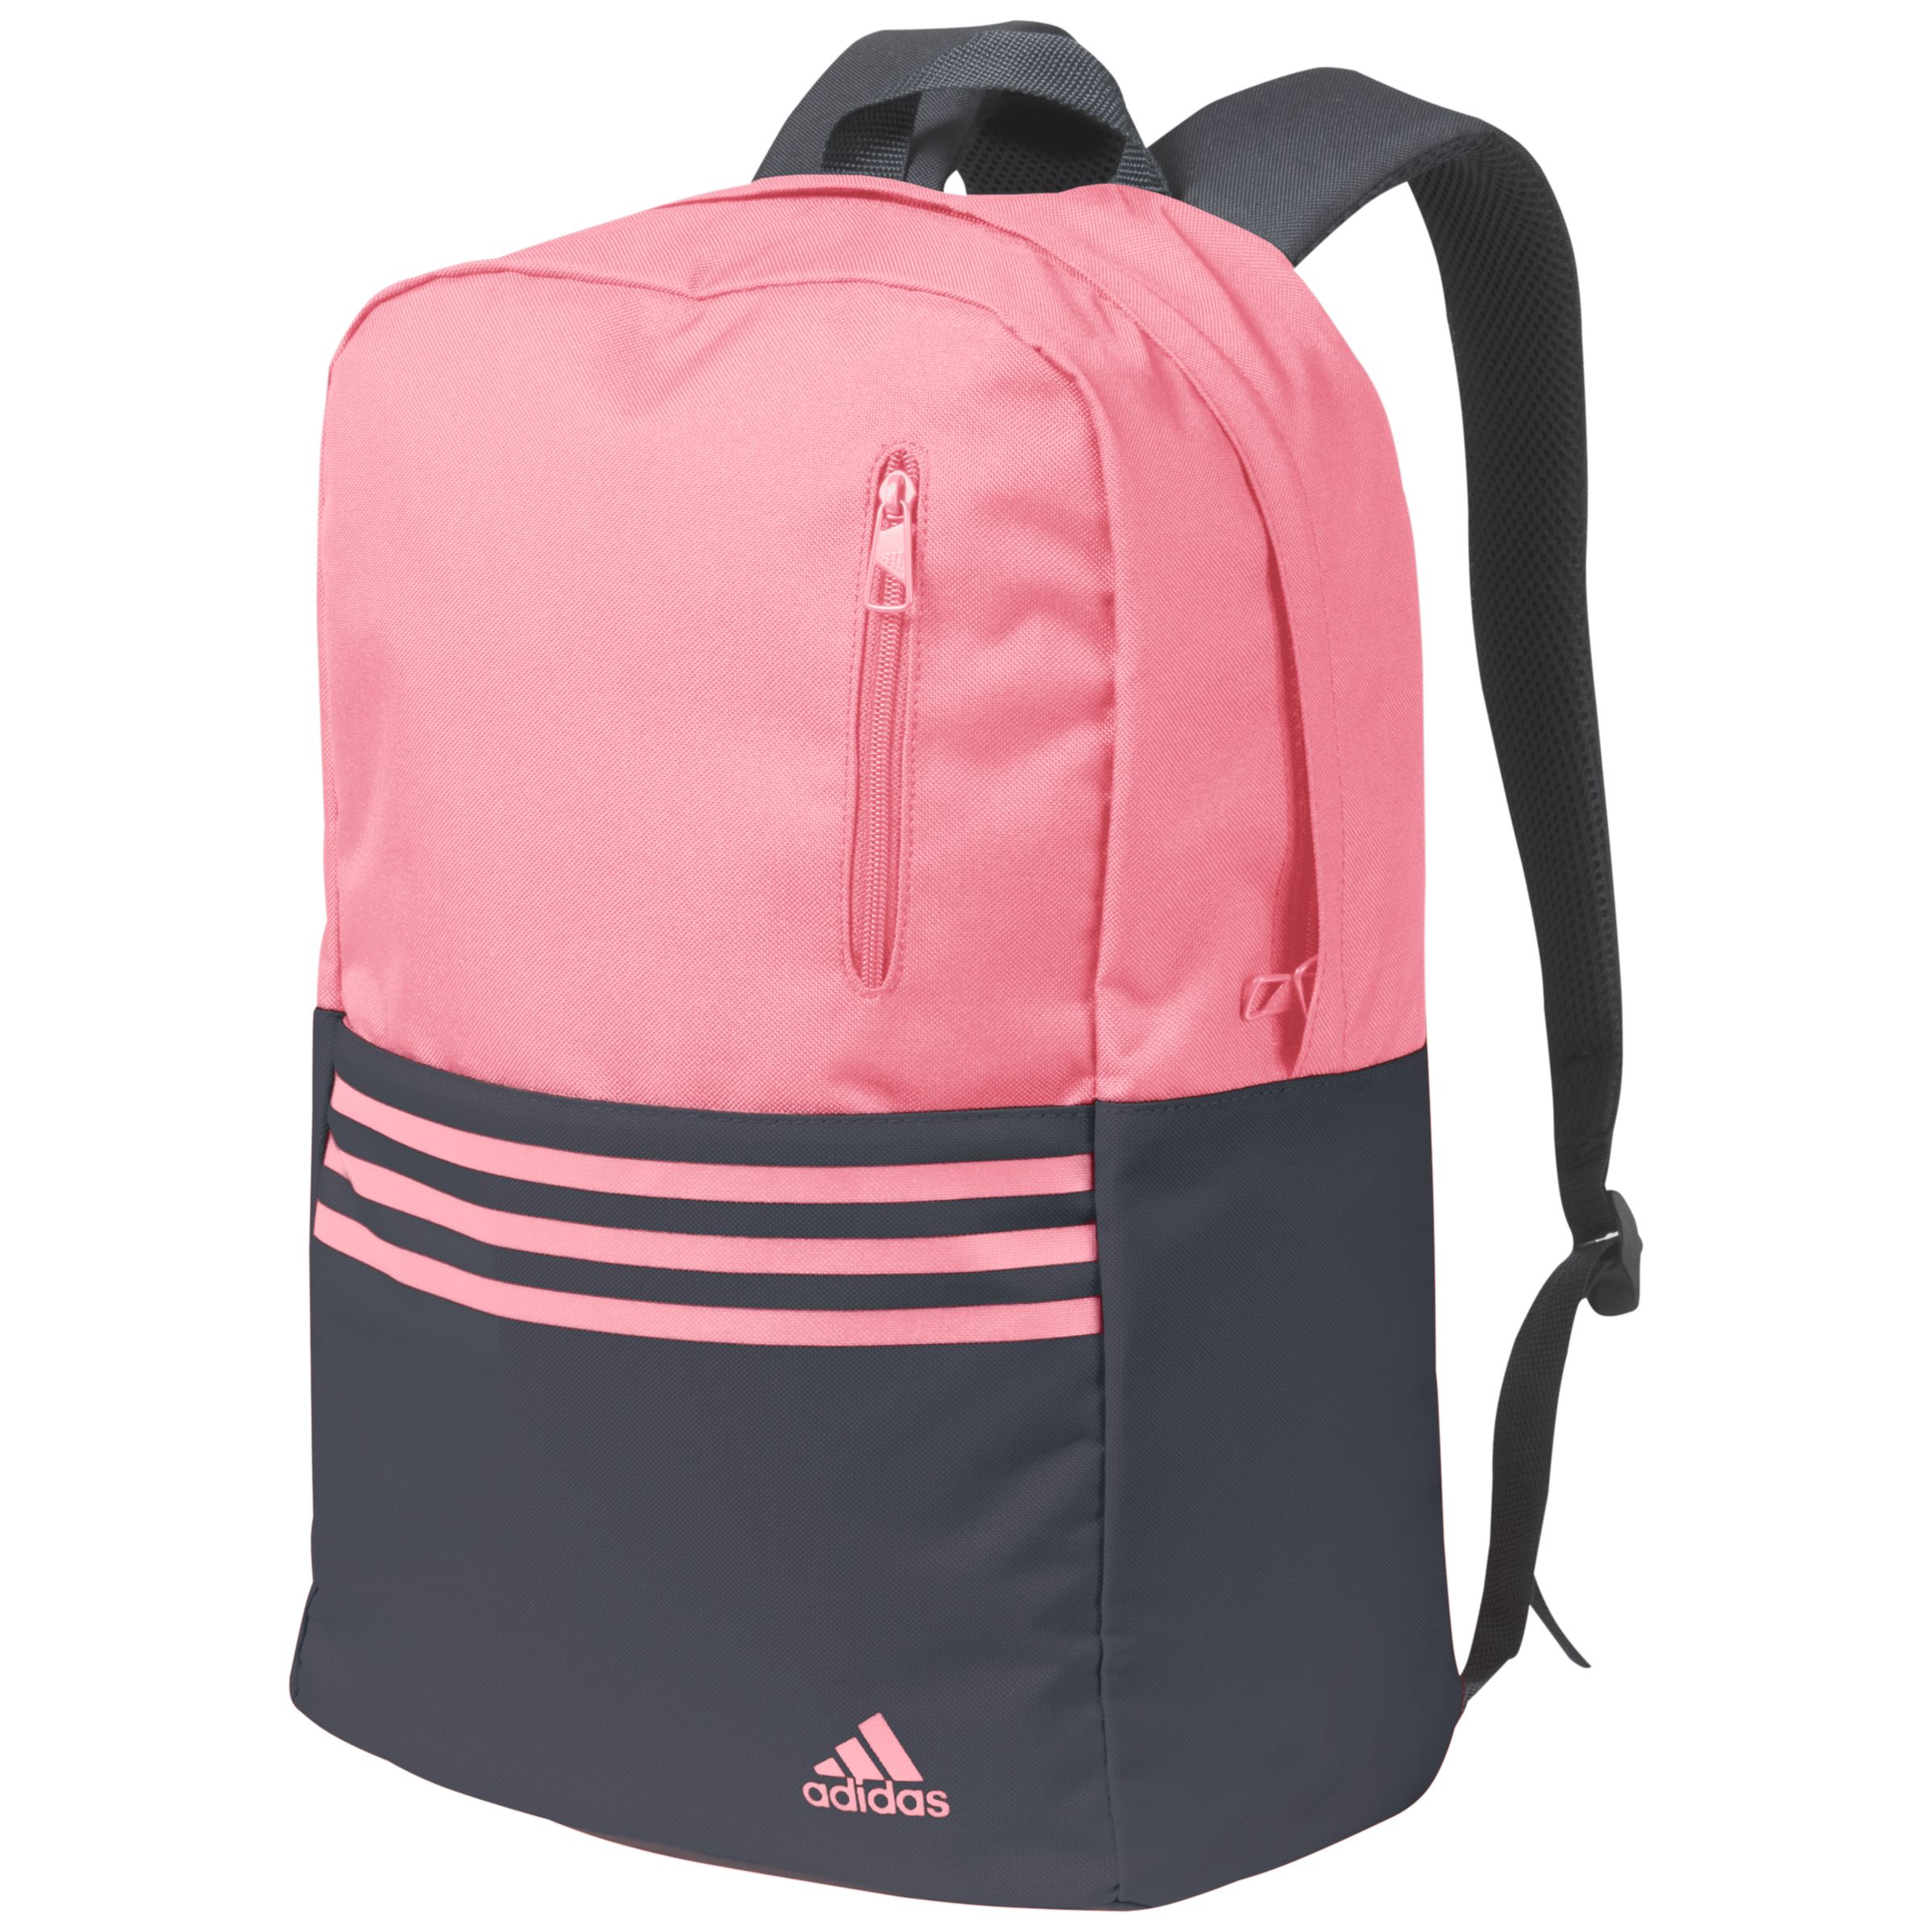 adidas backpack pink and grey